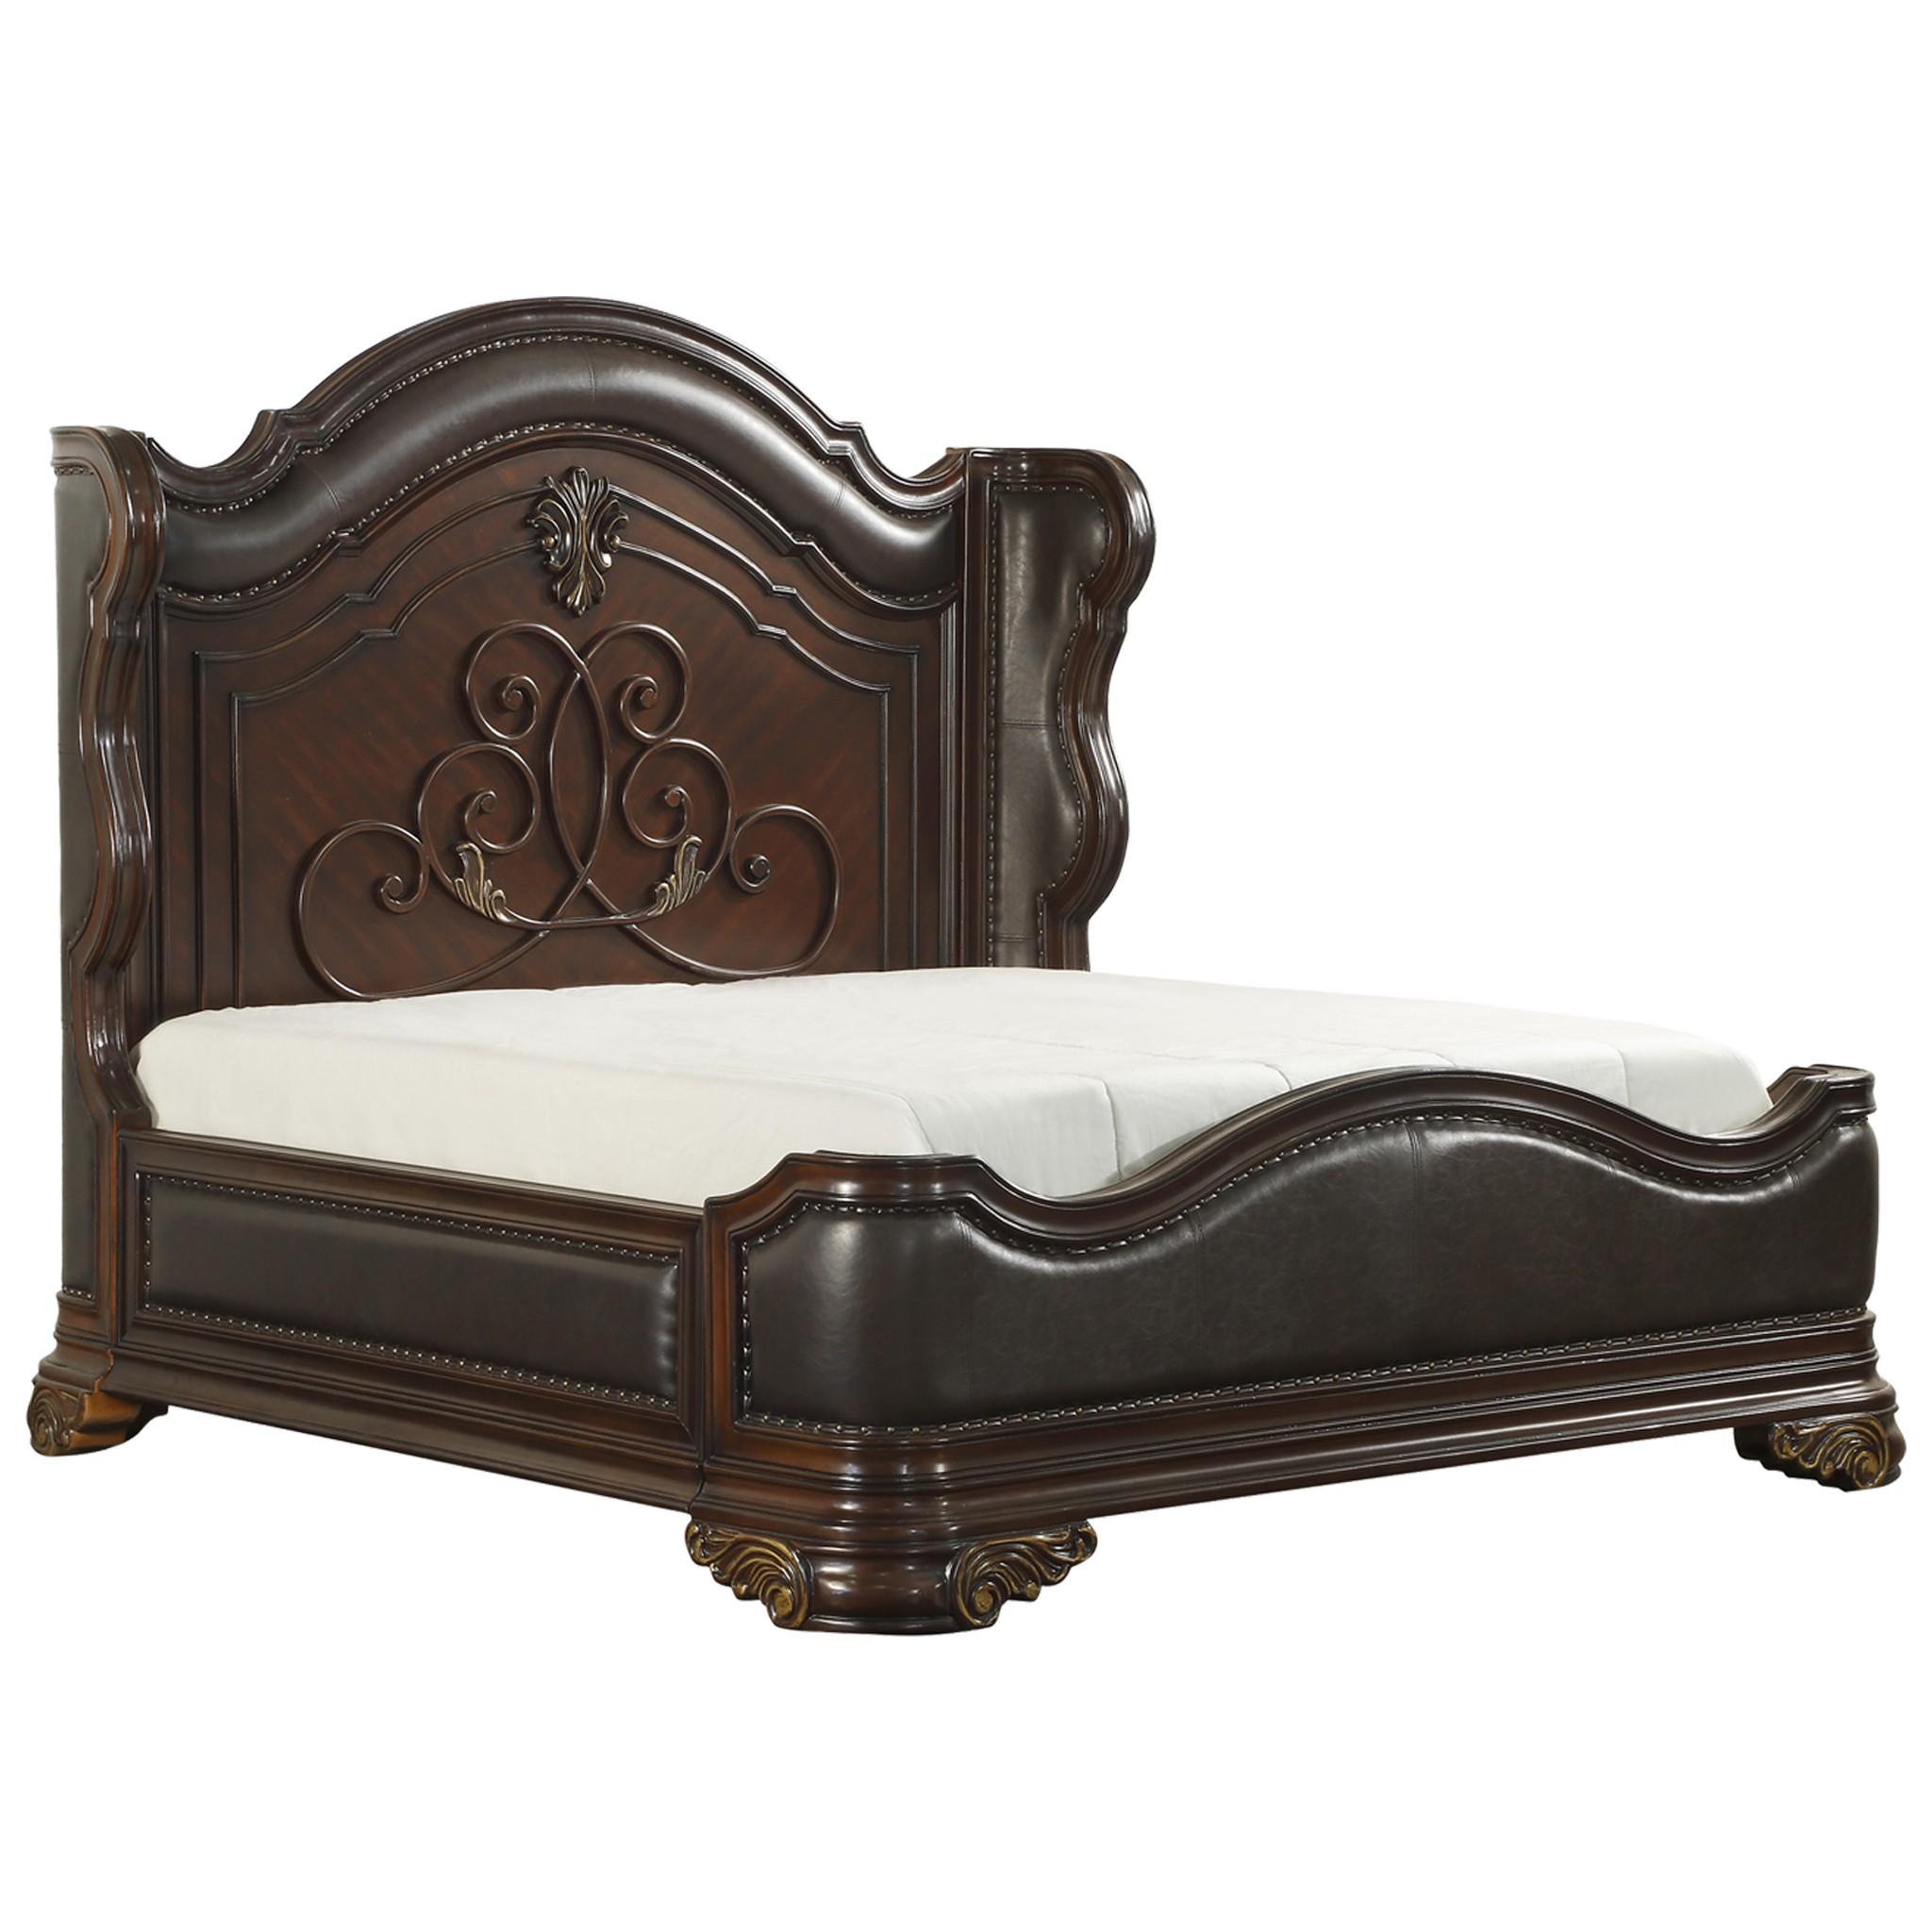 

    
Traditional Cherry Wood Queen Bedroom Set 6pcs Homelegance 1603-1* Royal Highlands
